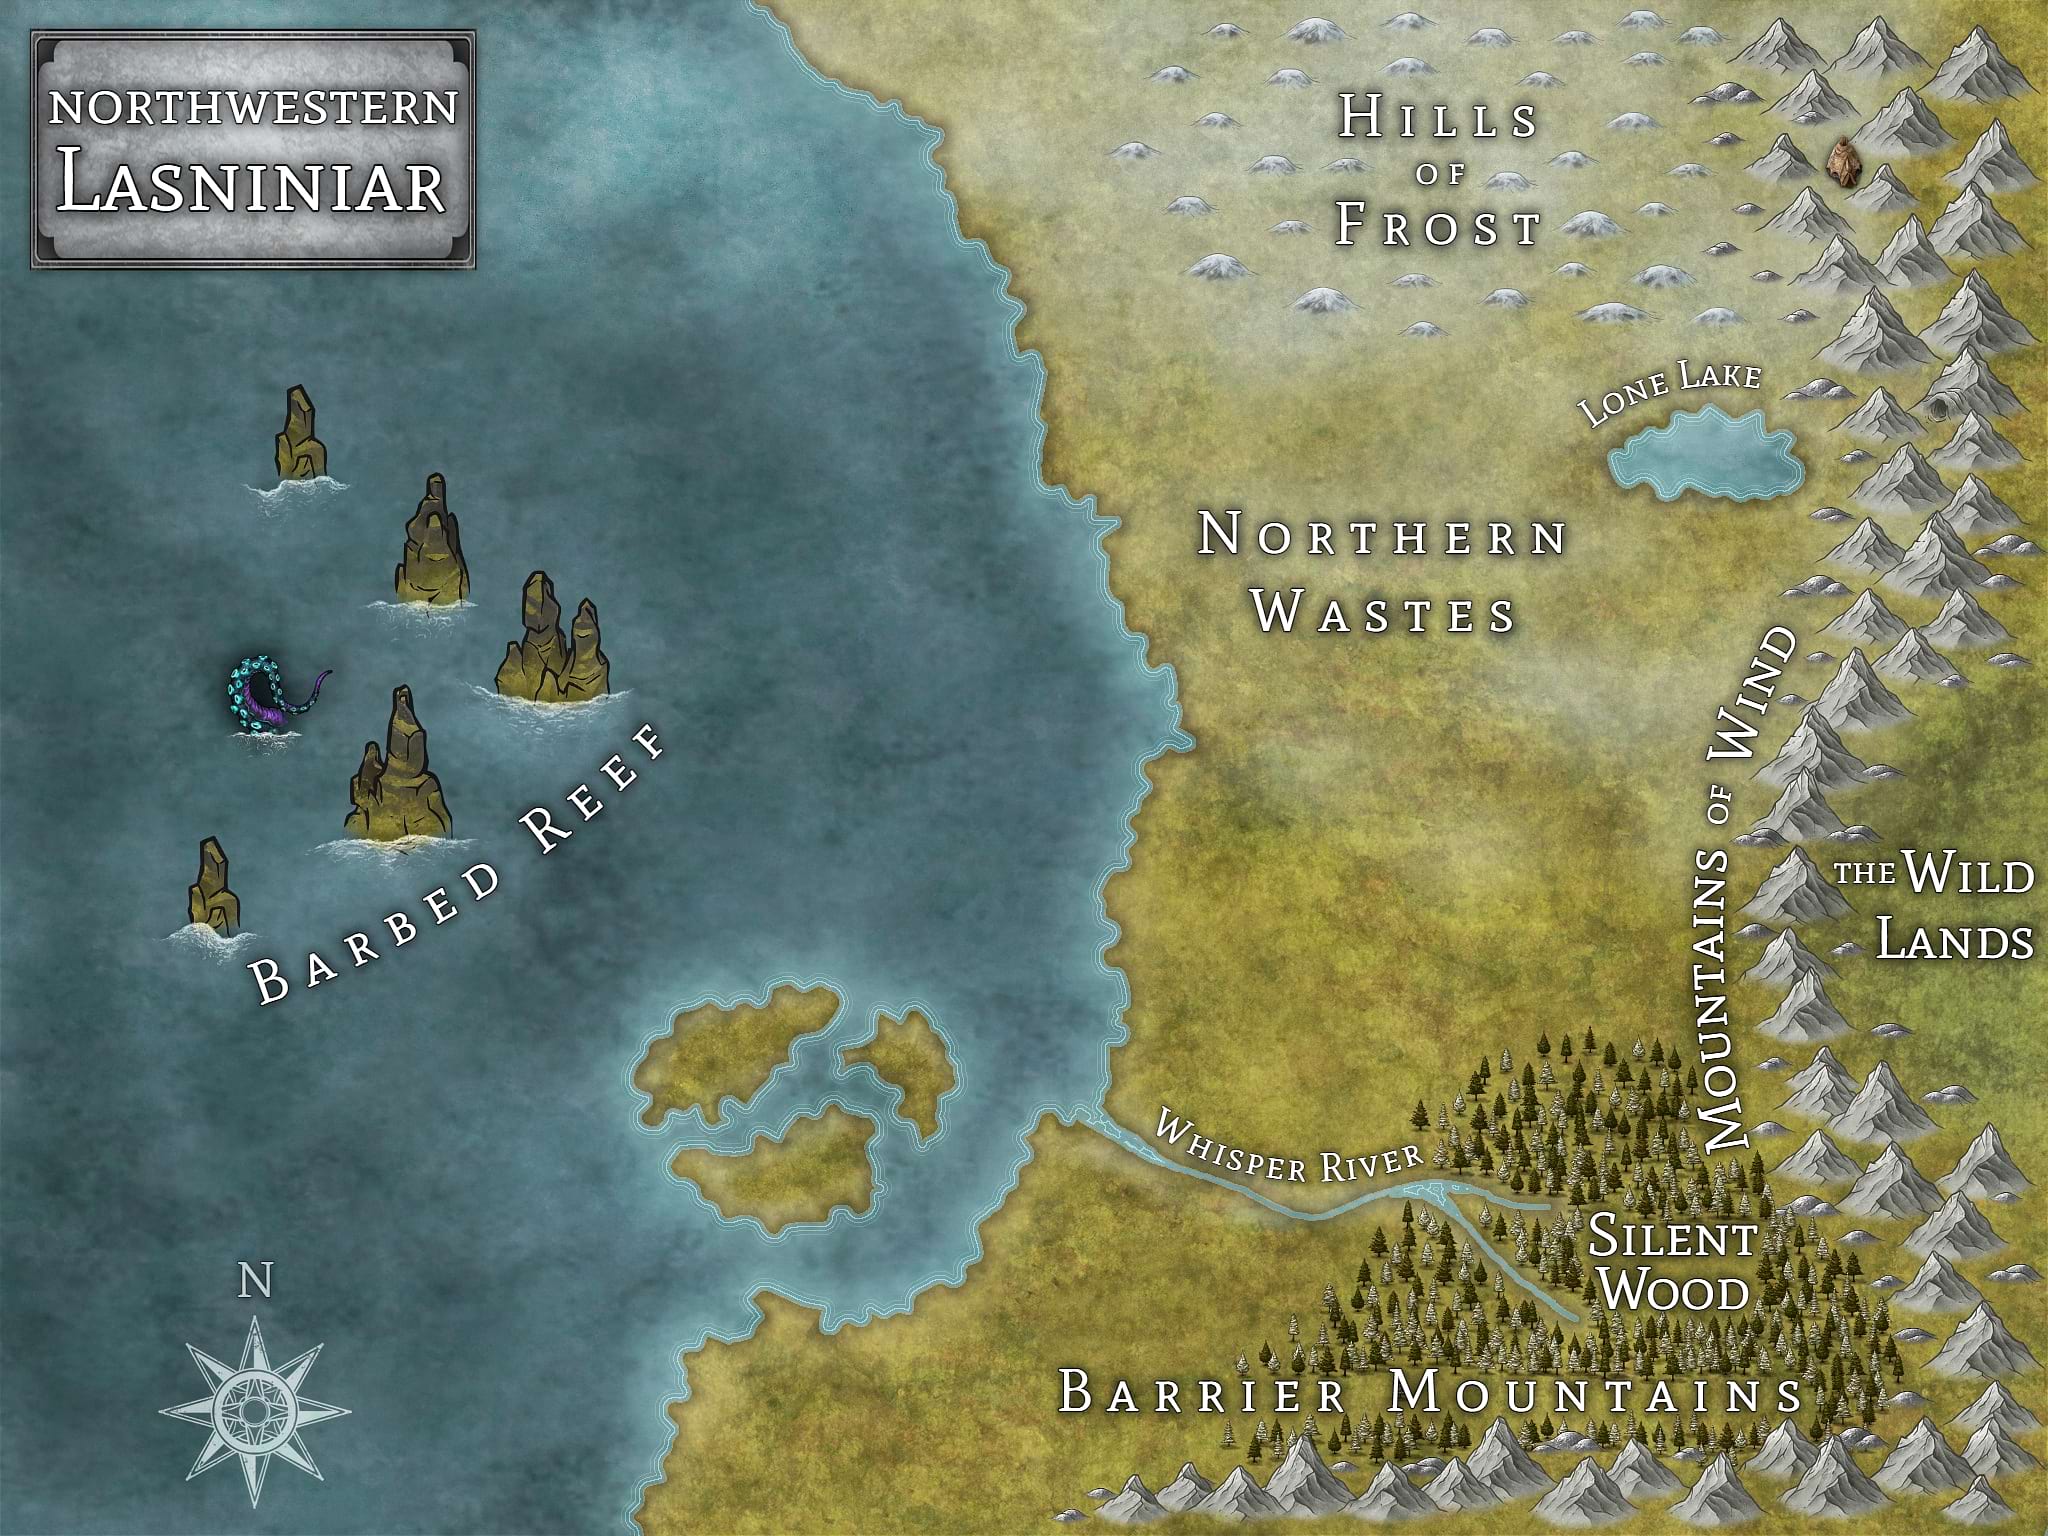 Map of Northwestern Lasniniar from the World of Lasniniar epic fantasy series